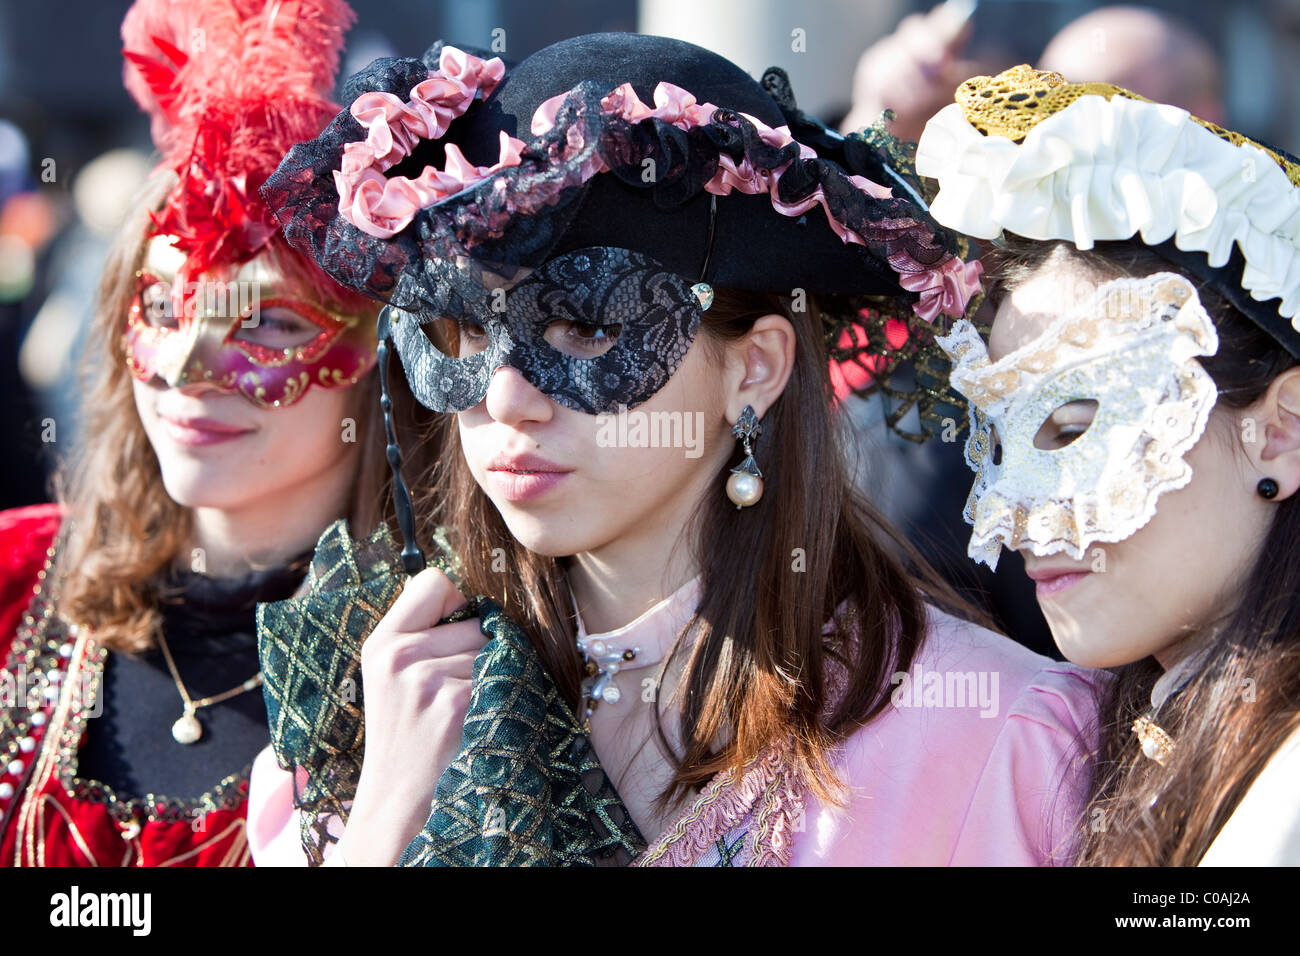 3 ragazze in costume di carnevale di Venezia Foto stock - Alamy